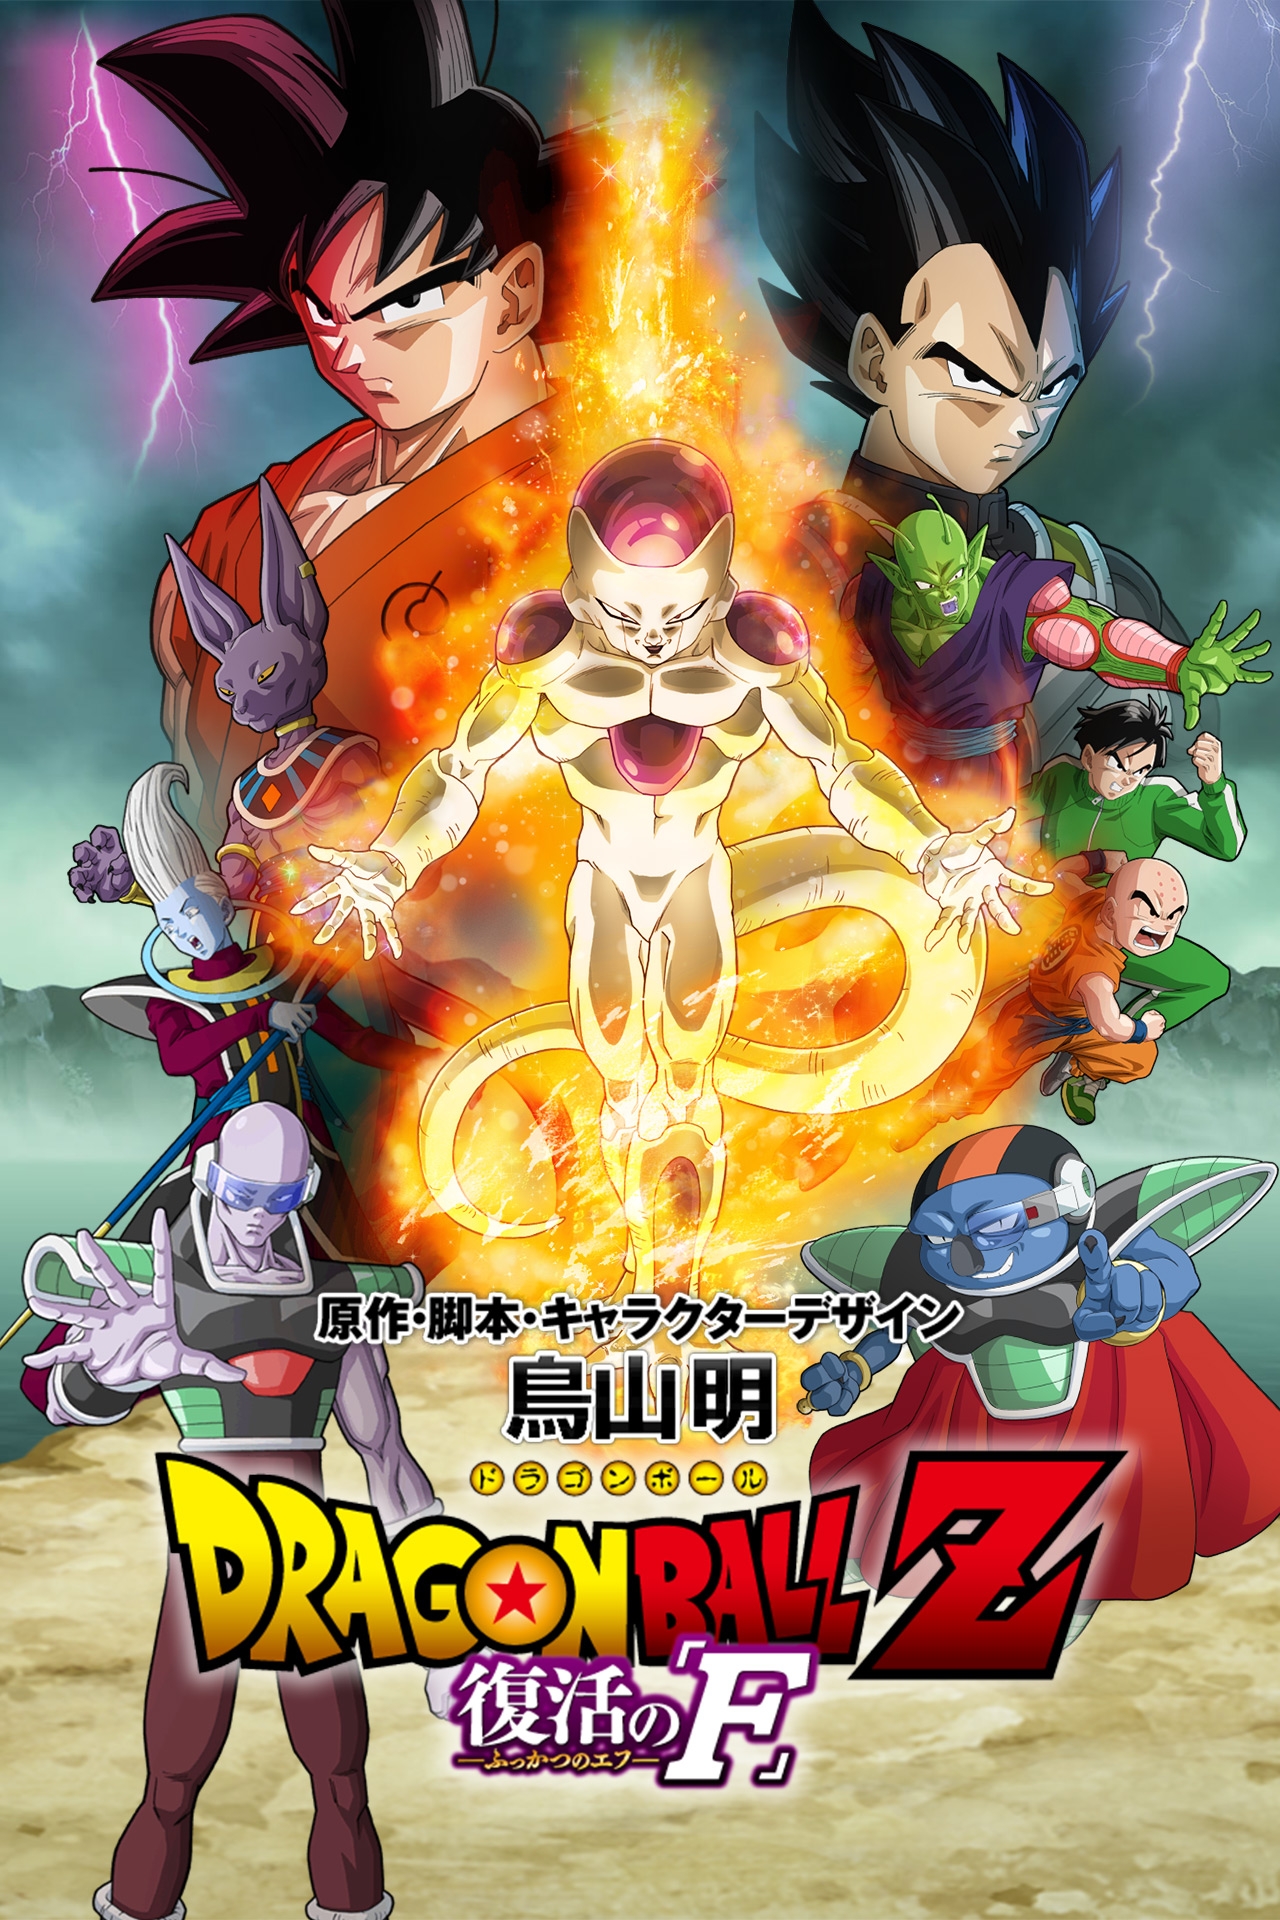 Dragon Ball Z: Resurrection 'F', Dragon Ball Wiki